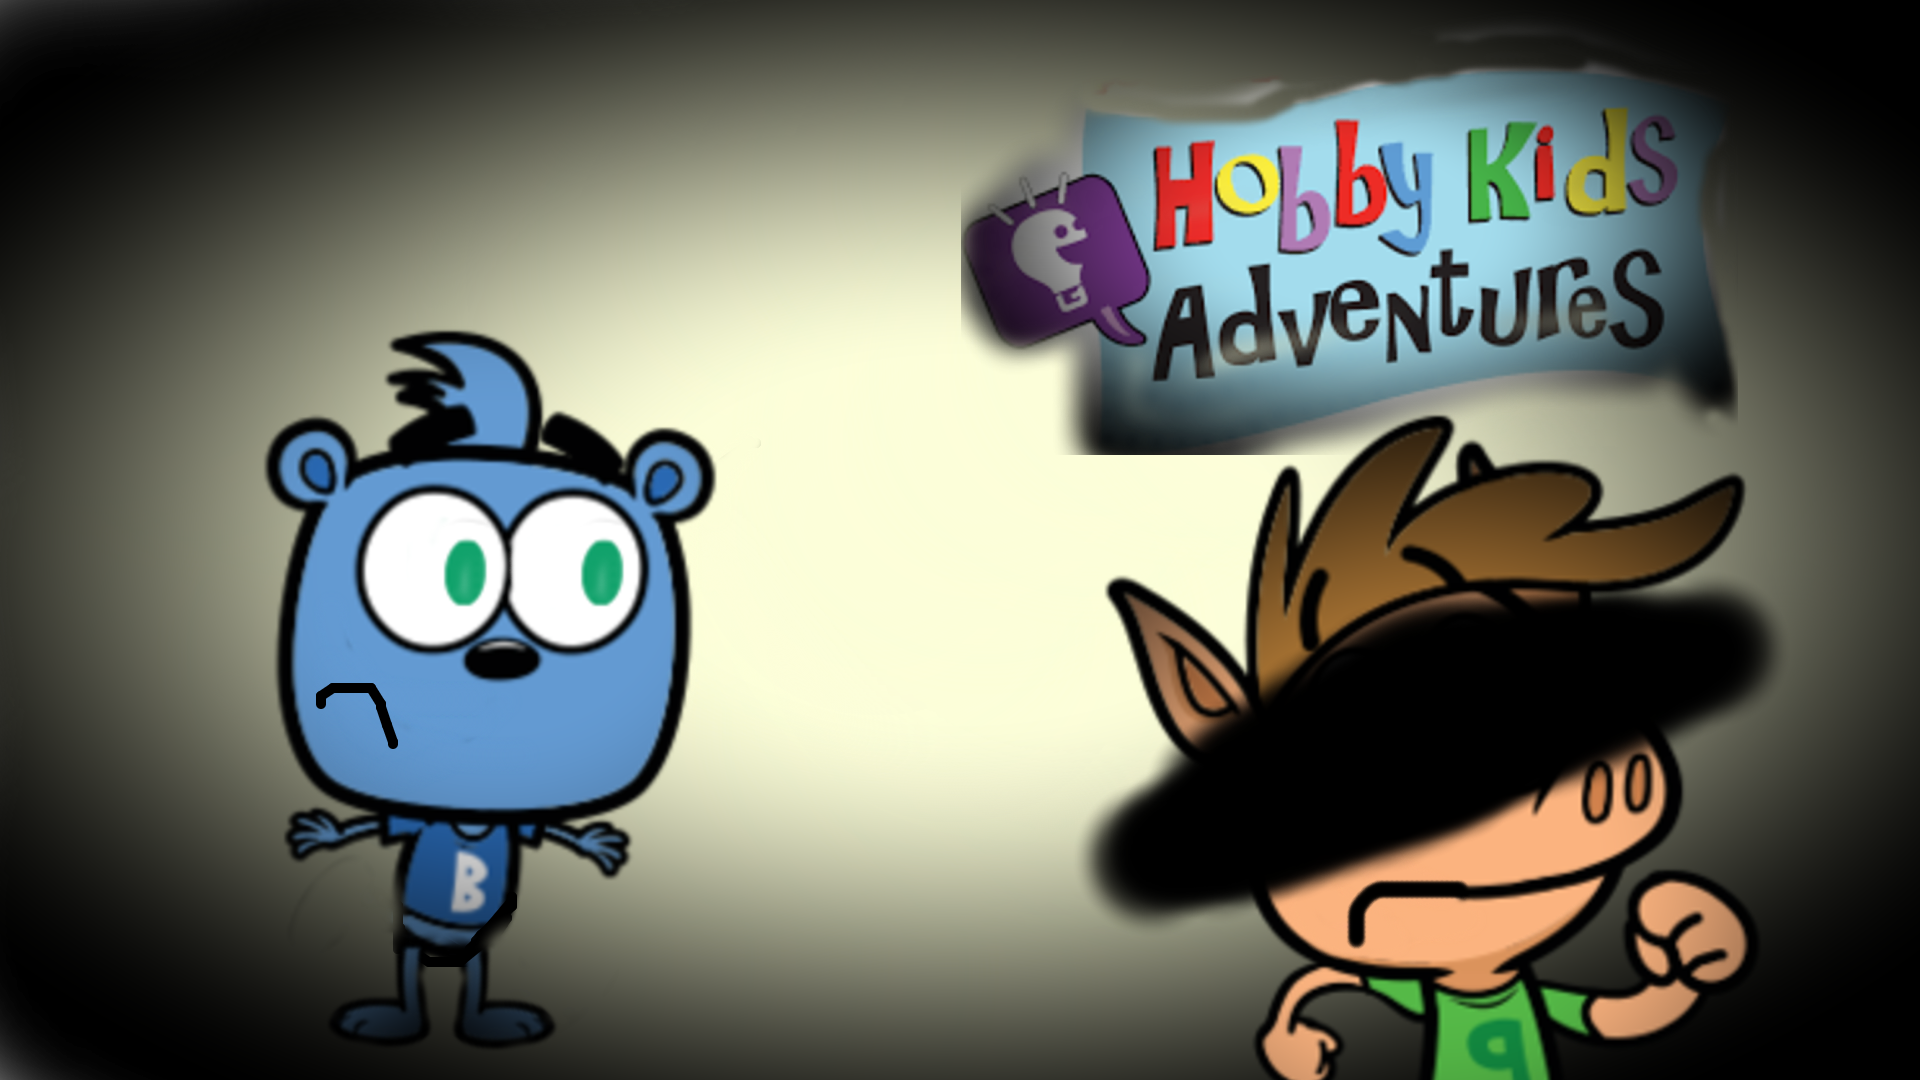 Hobbykids Adventures Lost Episode: HobbyPig's Depression. Geoshea's Lost Episodes